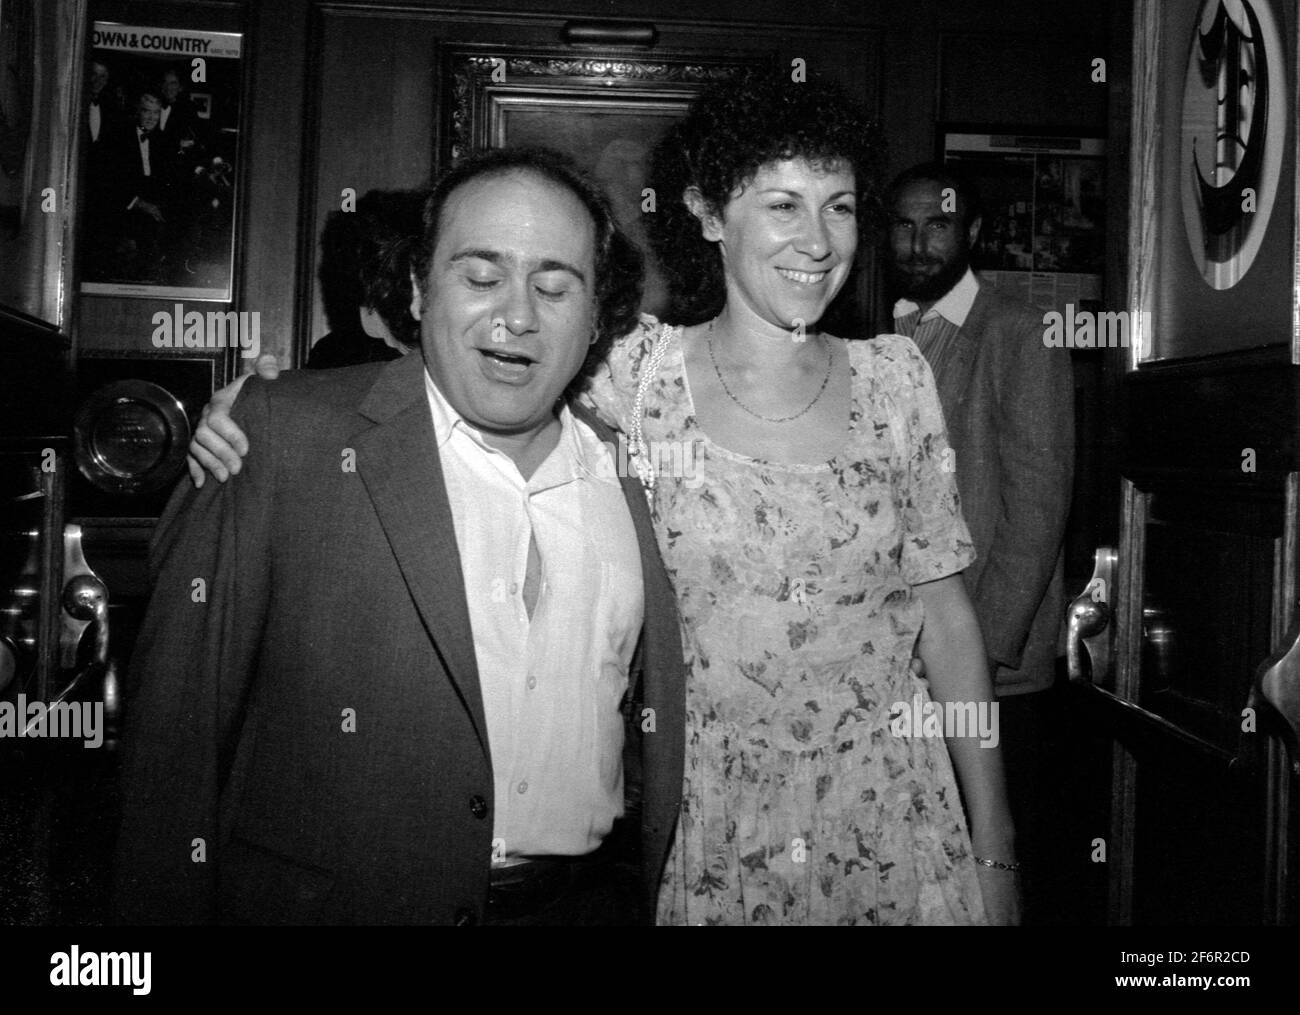 Danny De Vito Unsigned Vintage Publicity Celebrity 8x10 Black and White Photo